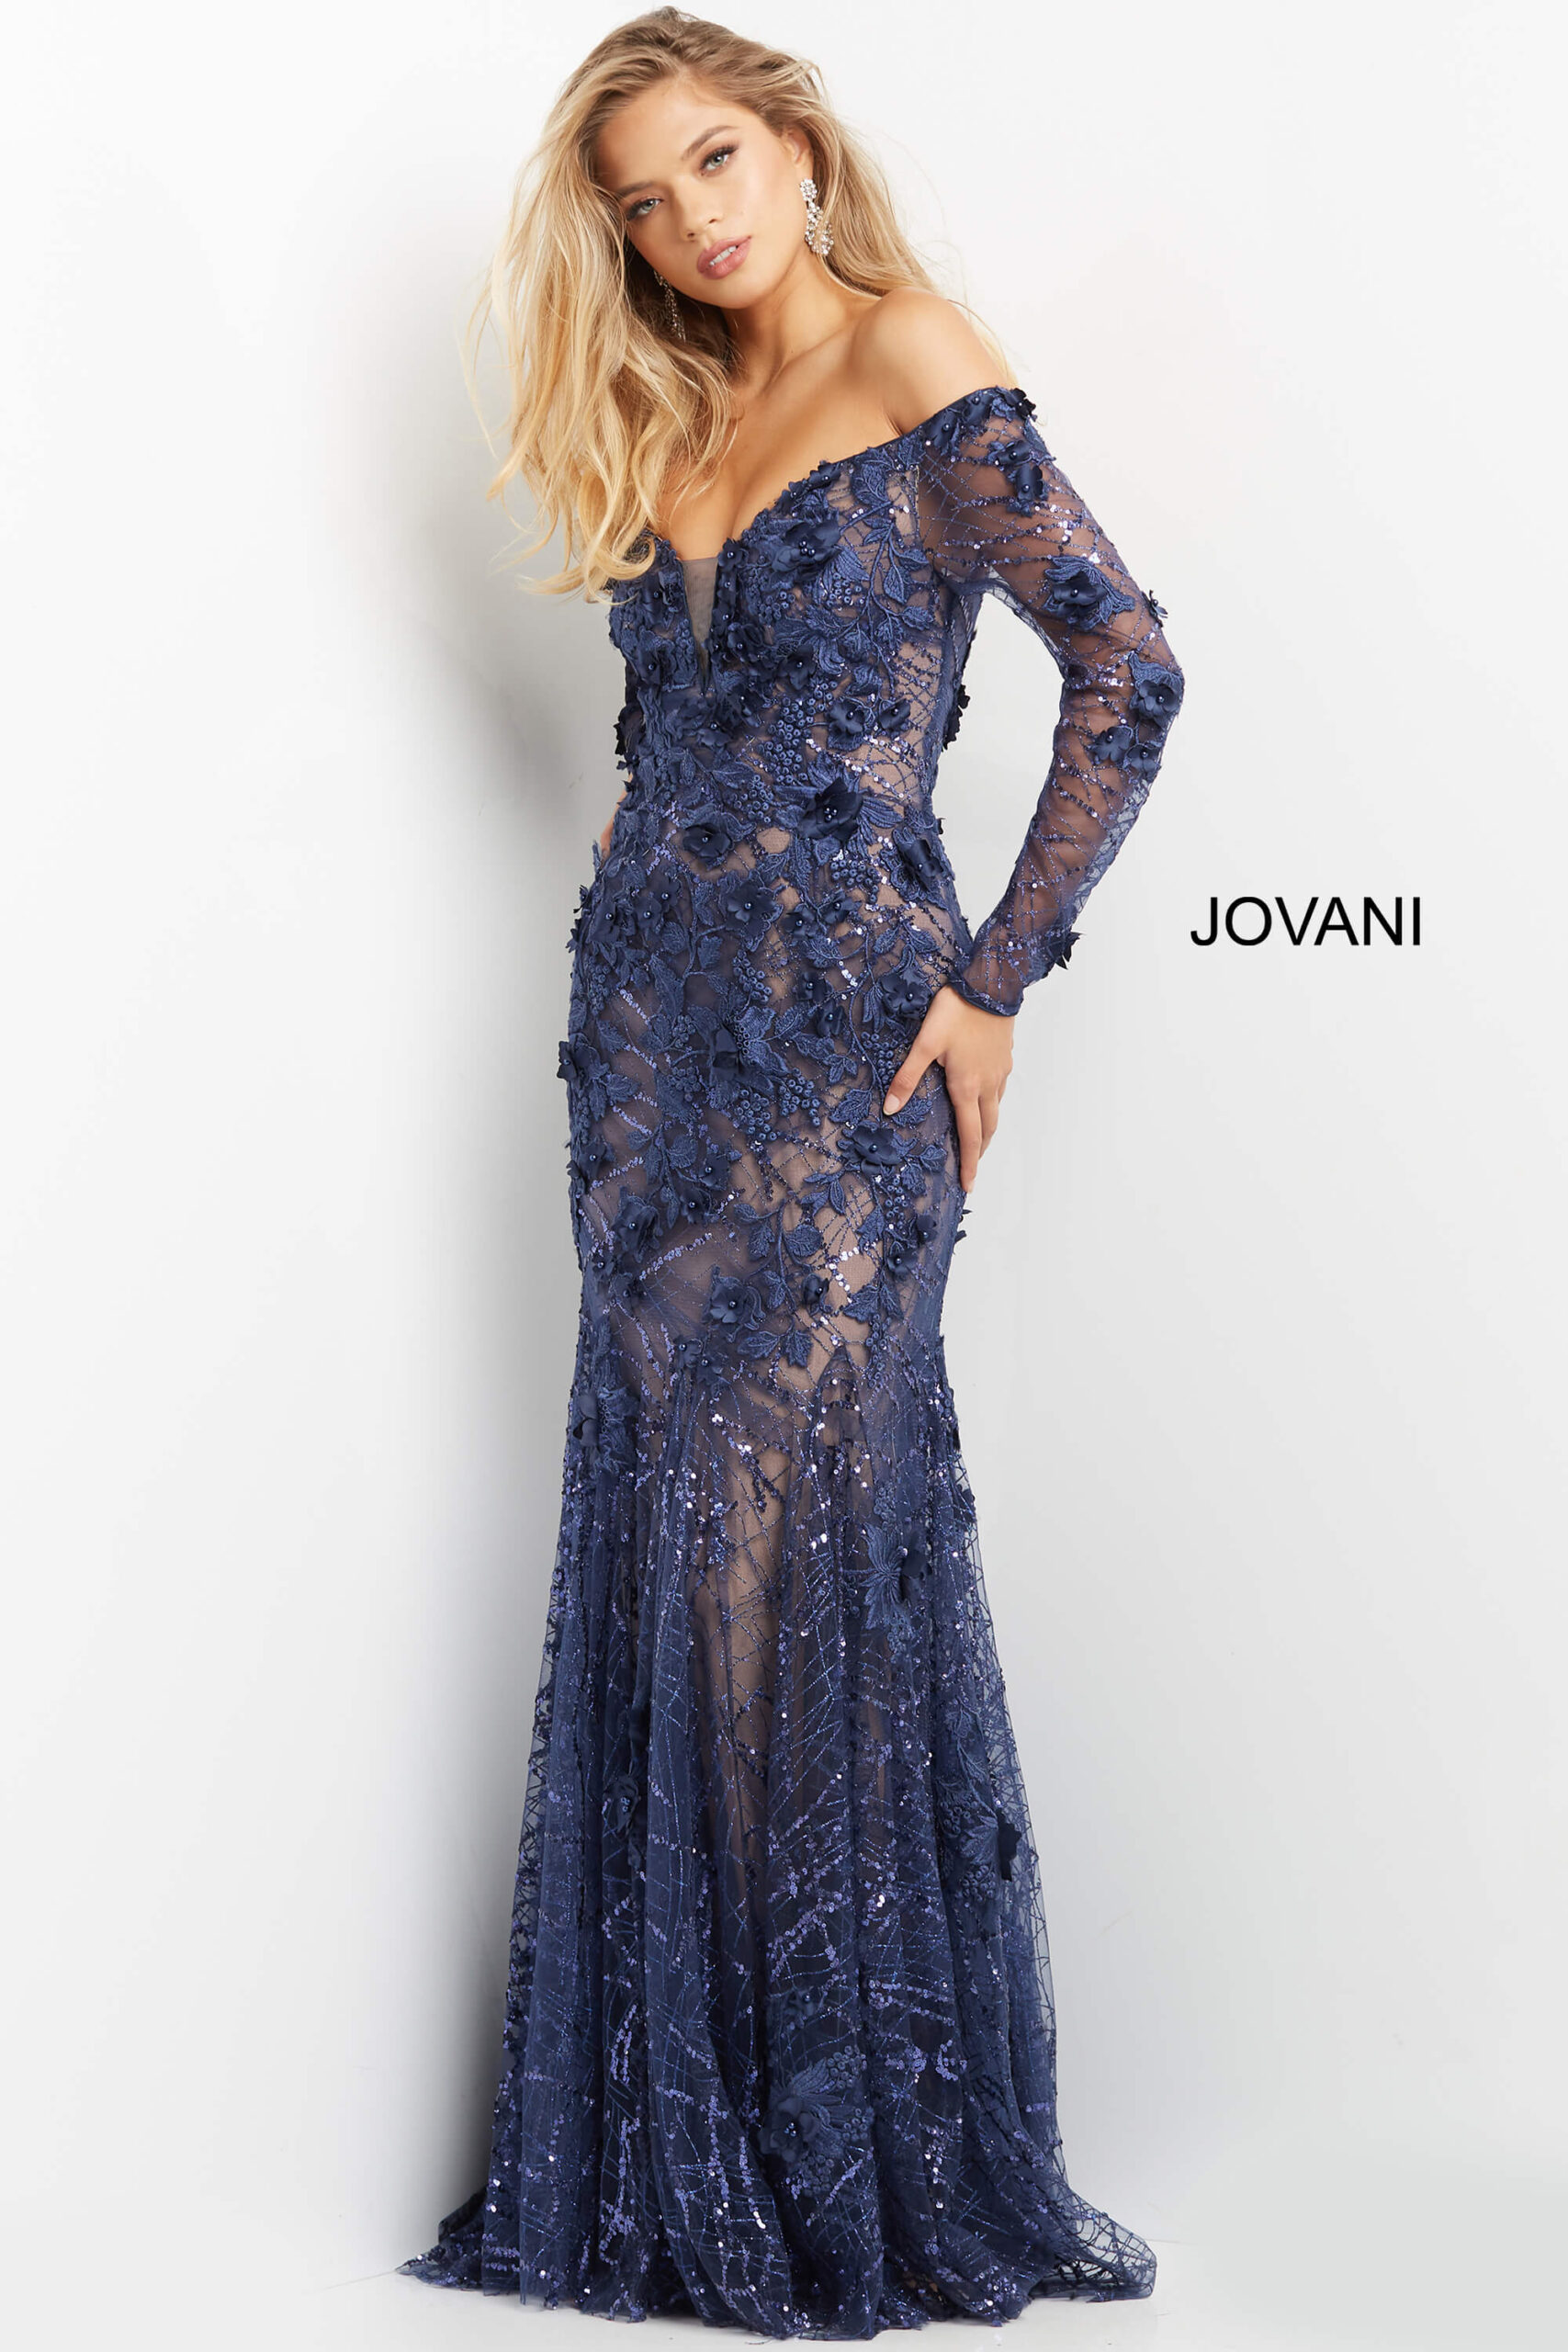 Jovani 06635 Navy Floral Appliques Long Sleeve Evening Dress